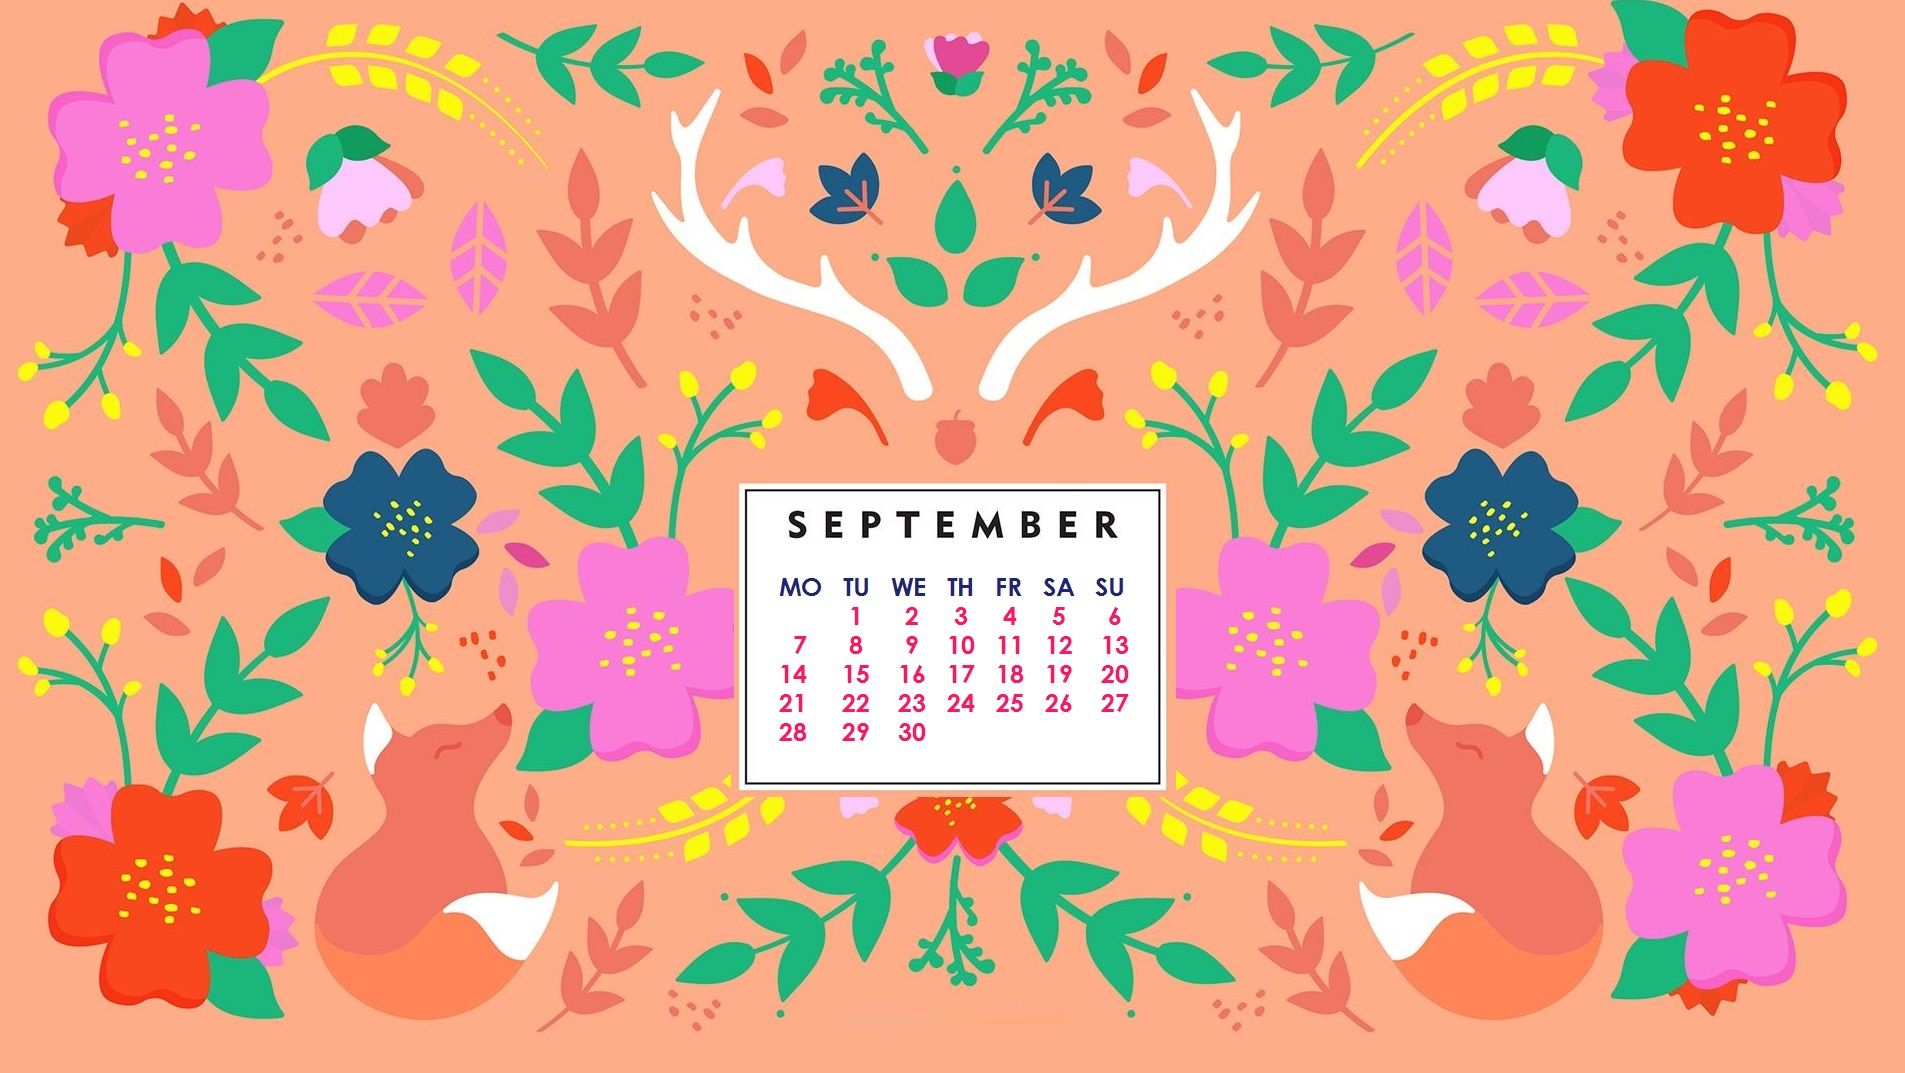 September 2020 Wallpaper Calendar